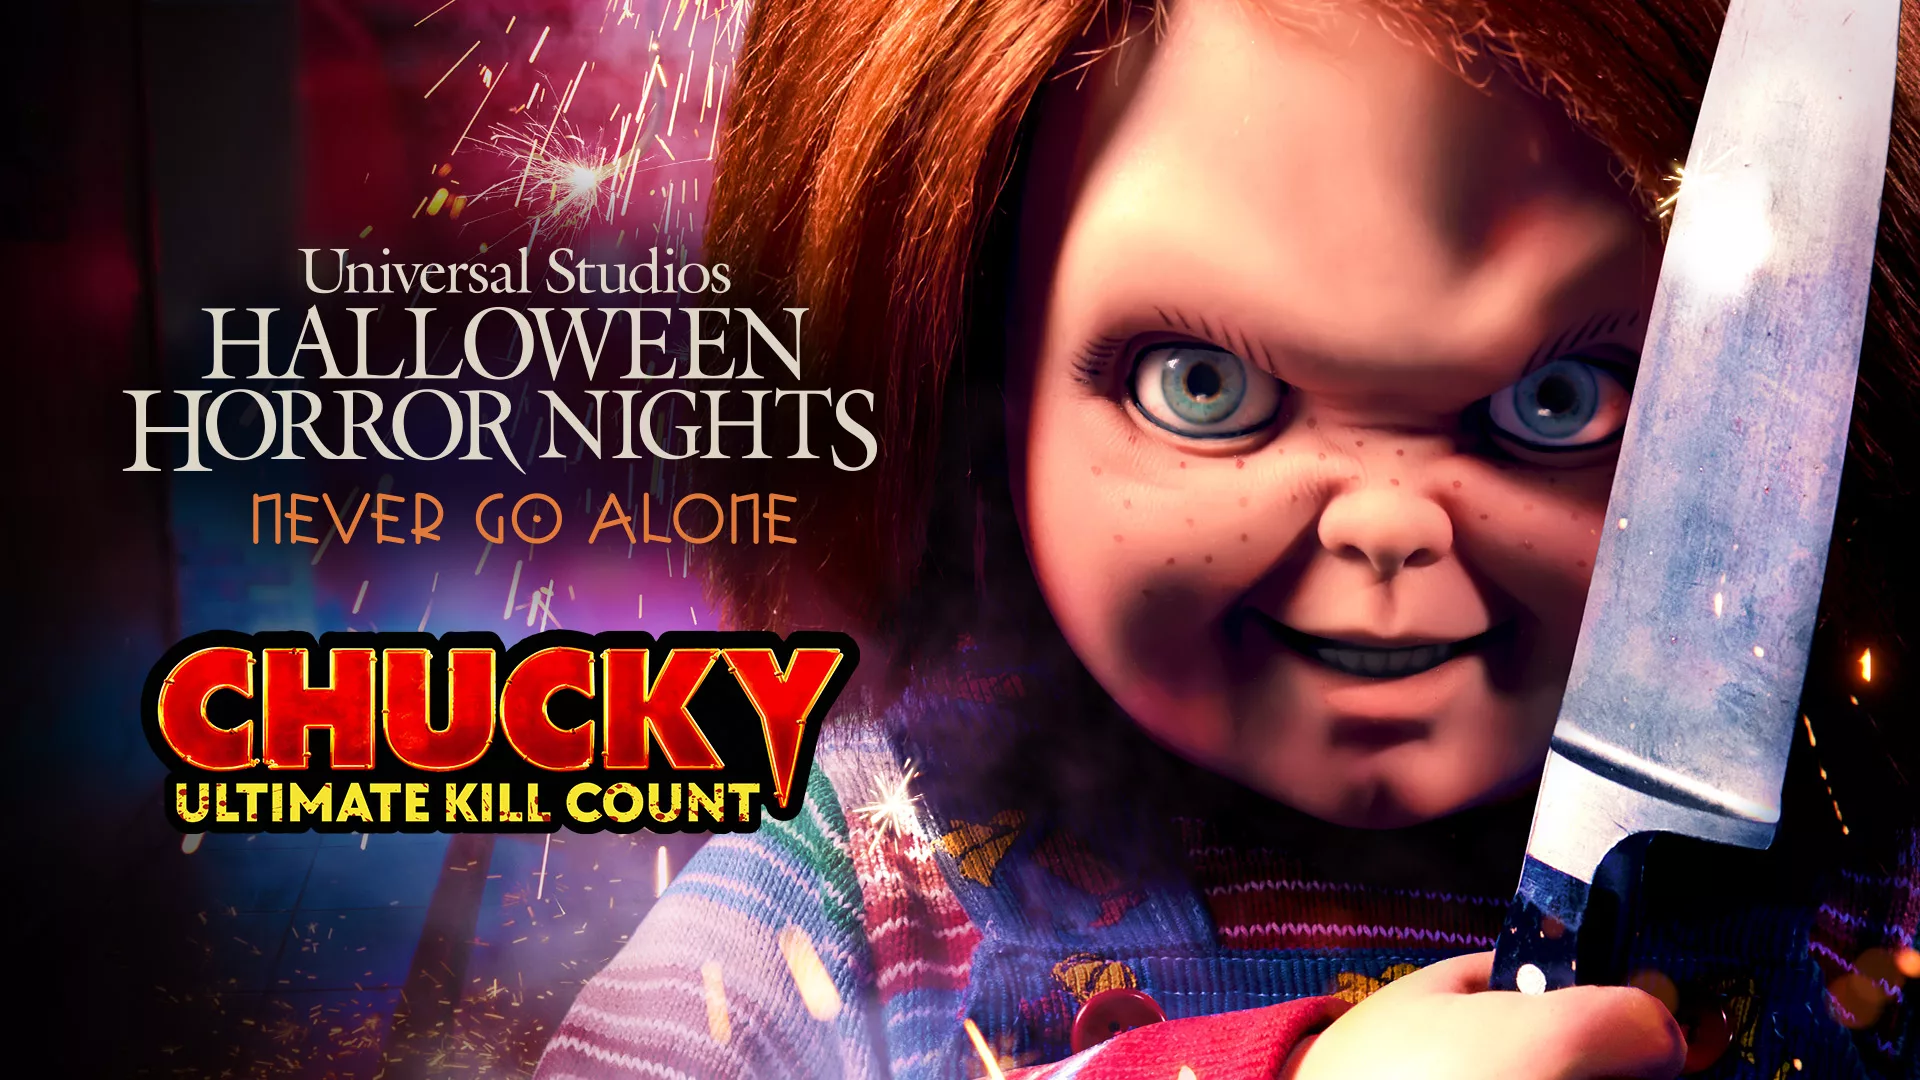 Chucky: Ultimate Kill Count Halloween Horror Nights